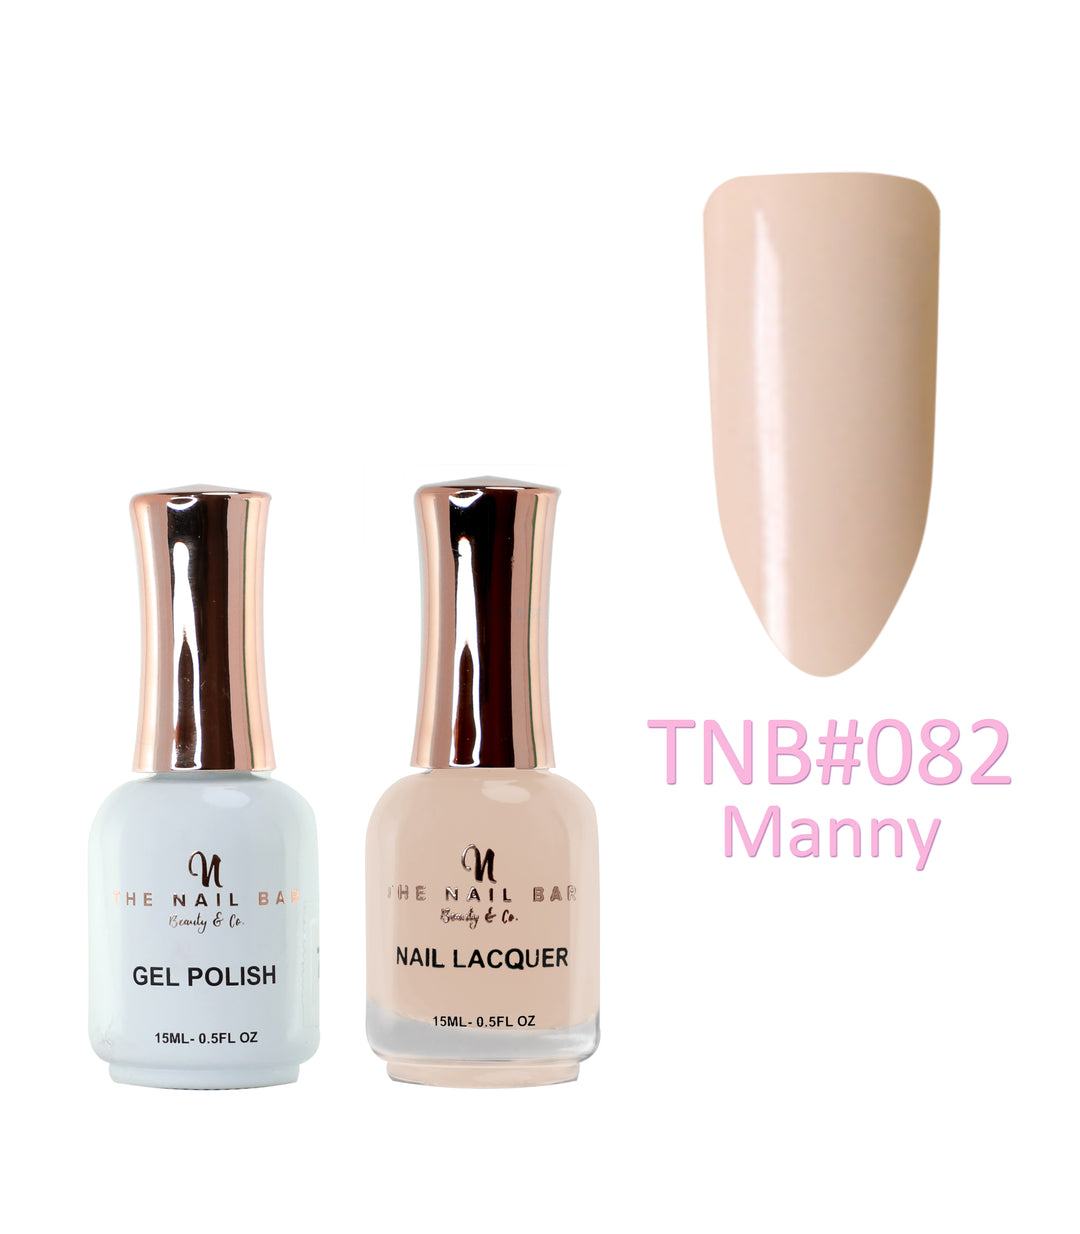 Dual Polish/Gel colour matching (15ml) - Manny - The Nail Bar Beauty & Co.